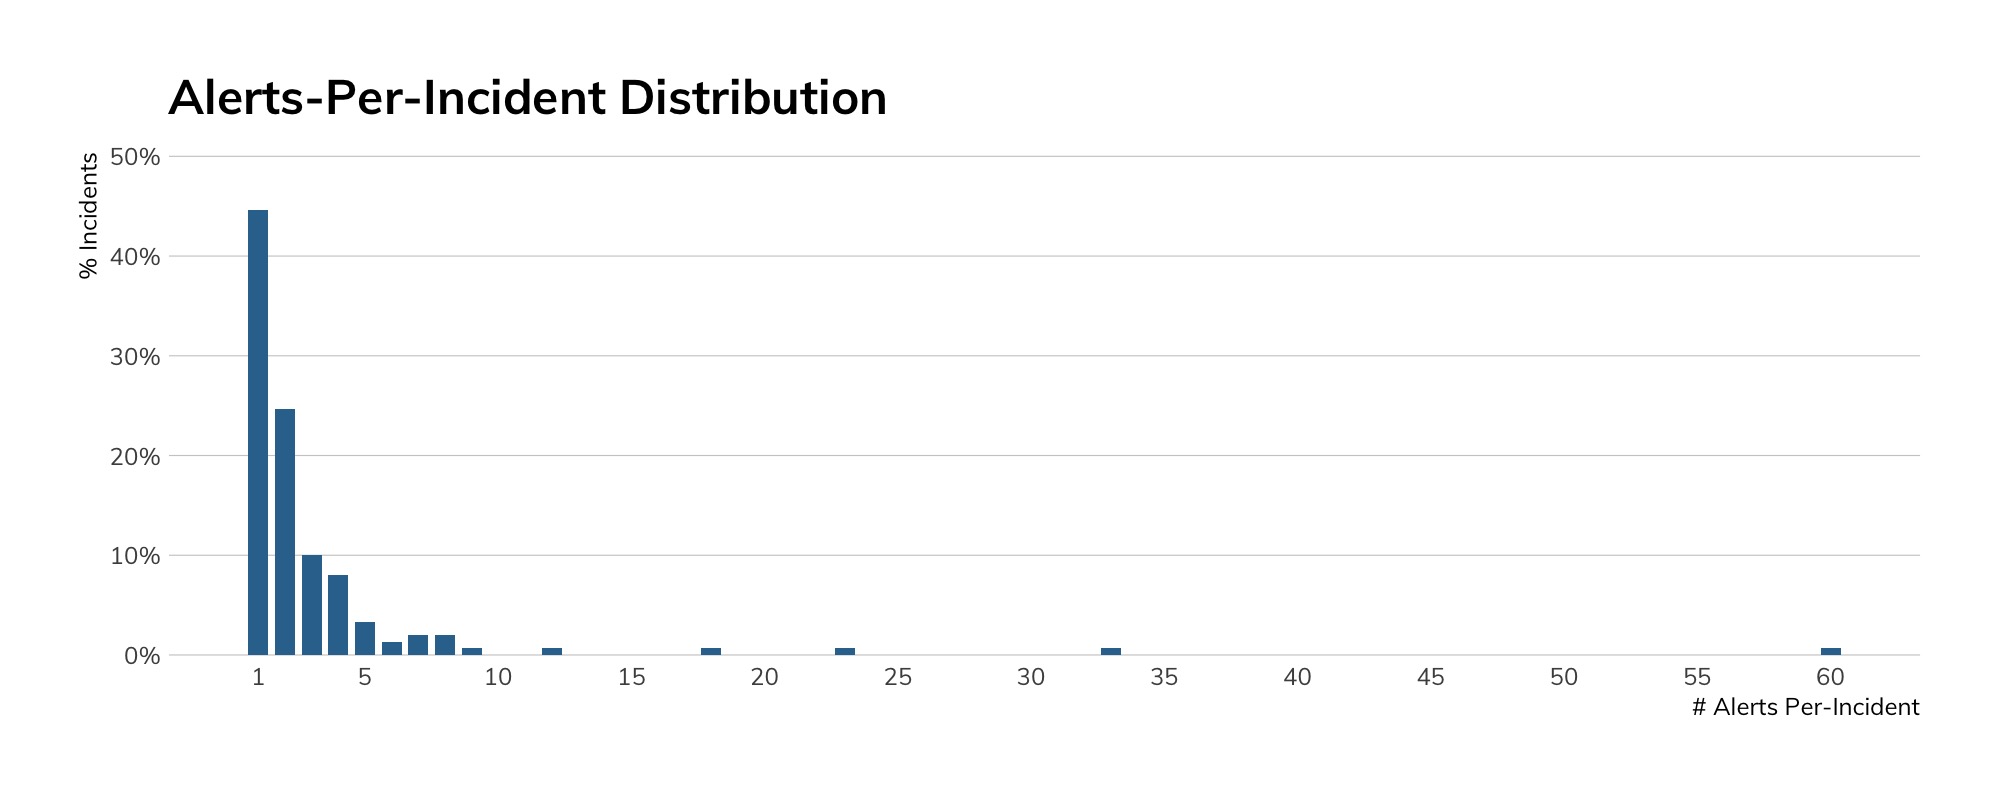 Figure 7: Alerts-Per-Incident Distribution